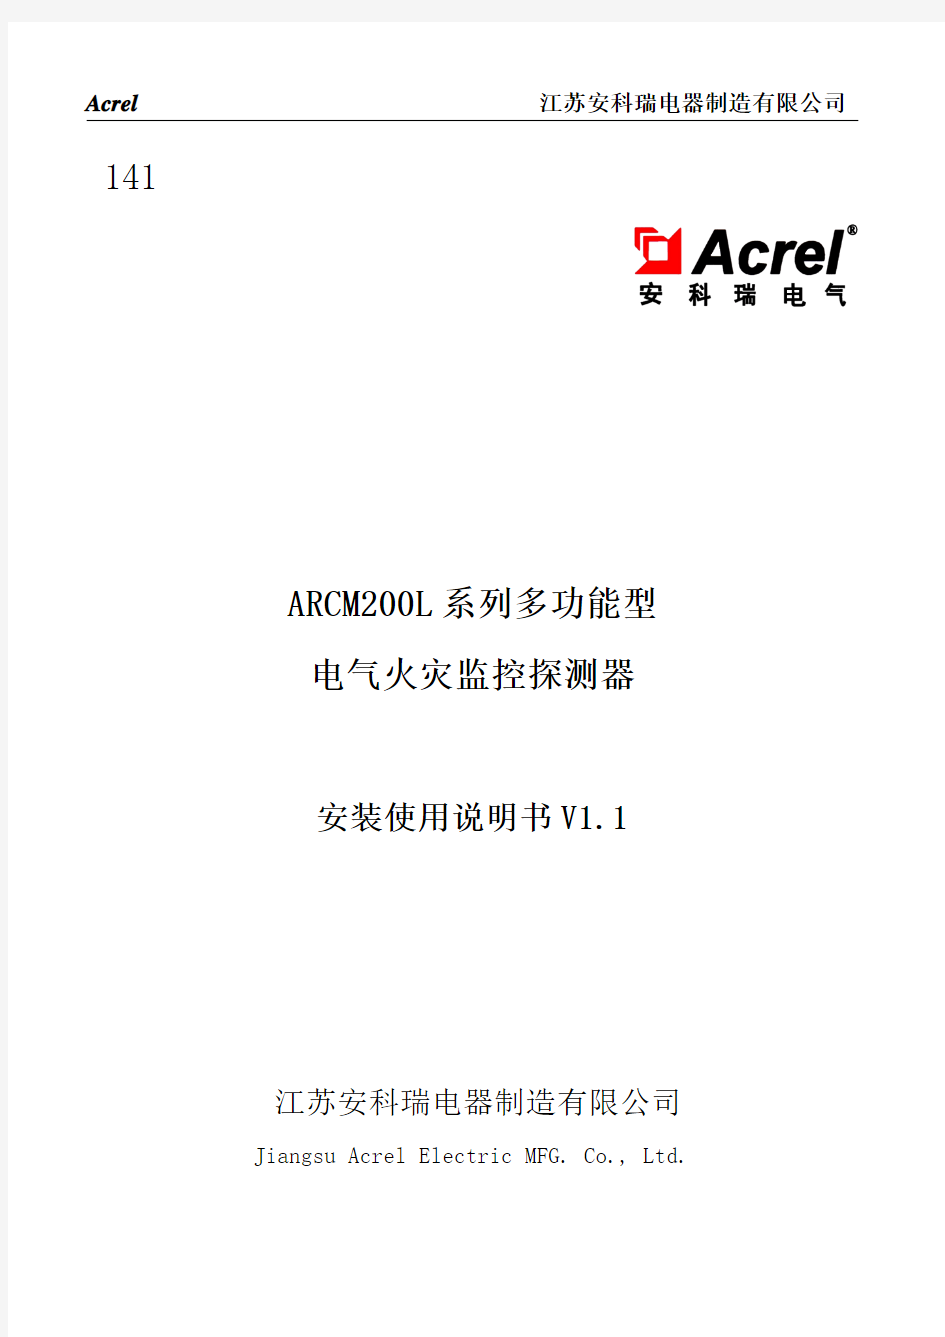 ARCM200L系列多功能型电气火灾监控探测器 使用说明书-安科瑞张玲玲